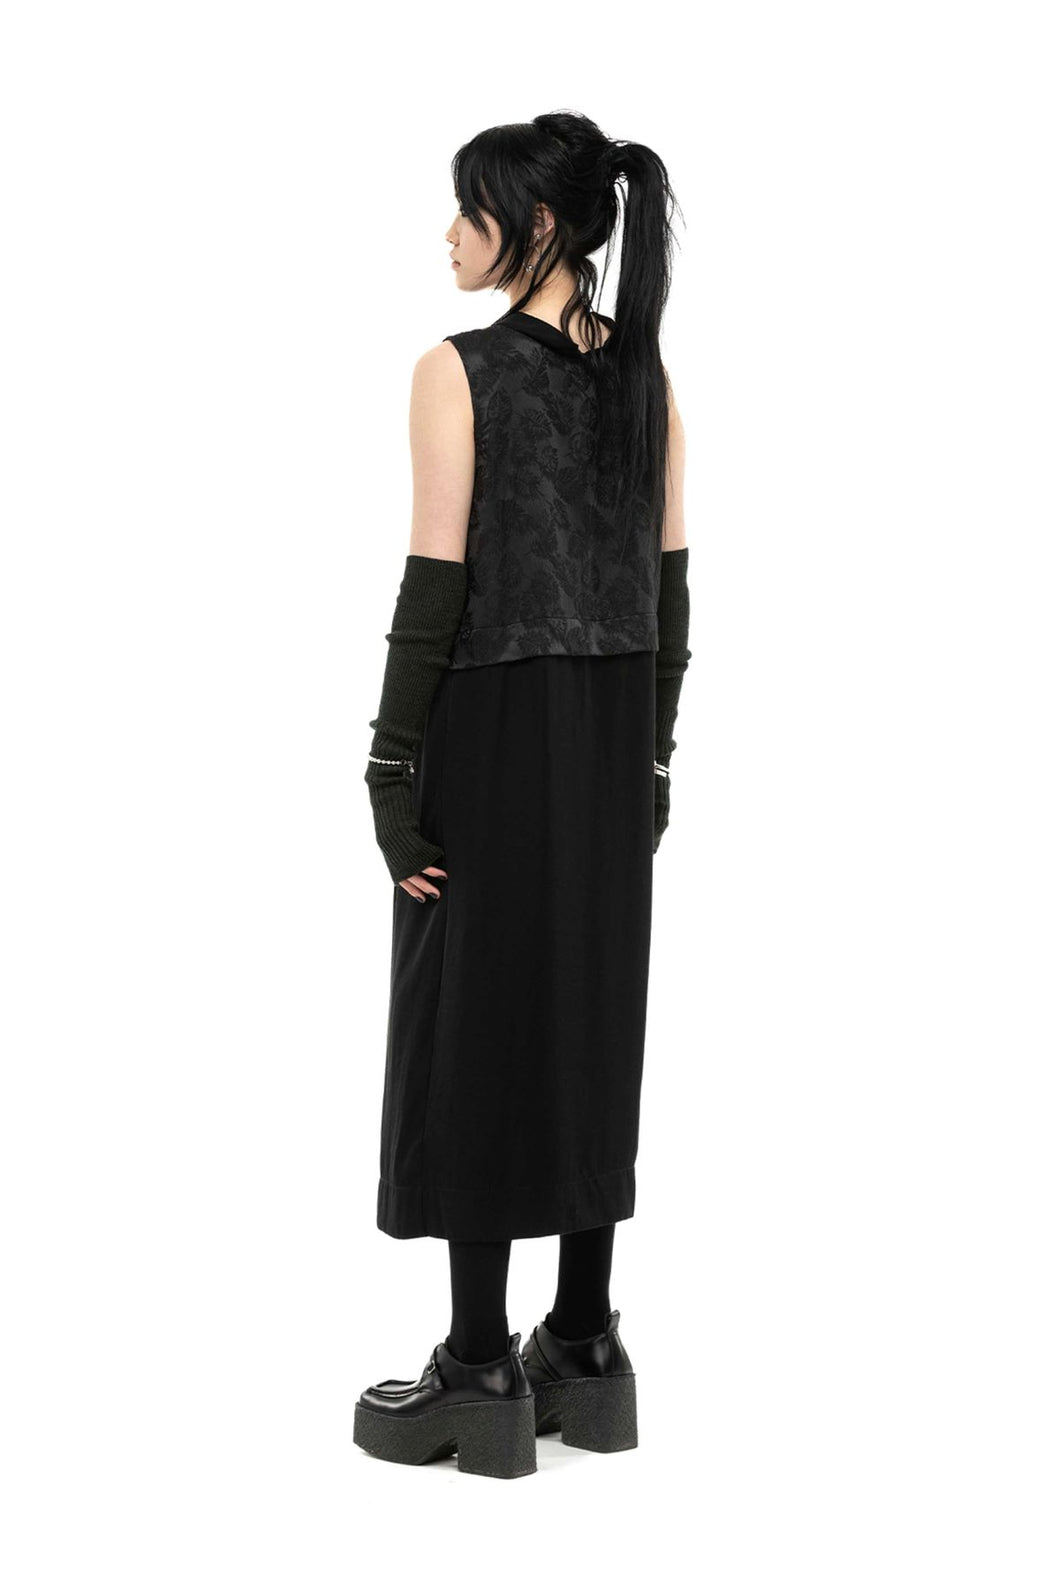 NOM*d Double Vision Dress - Black Leaf  Hyde Boutique   